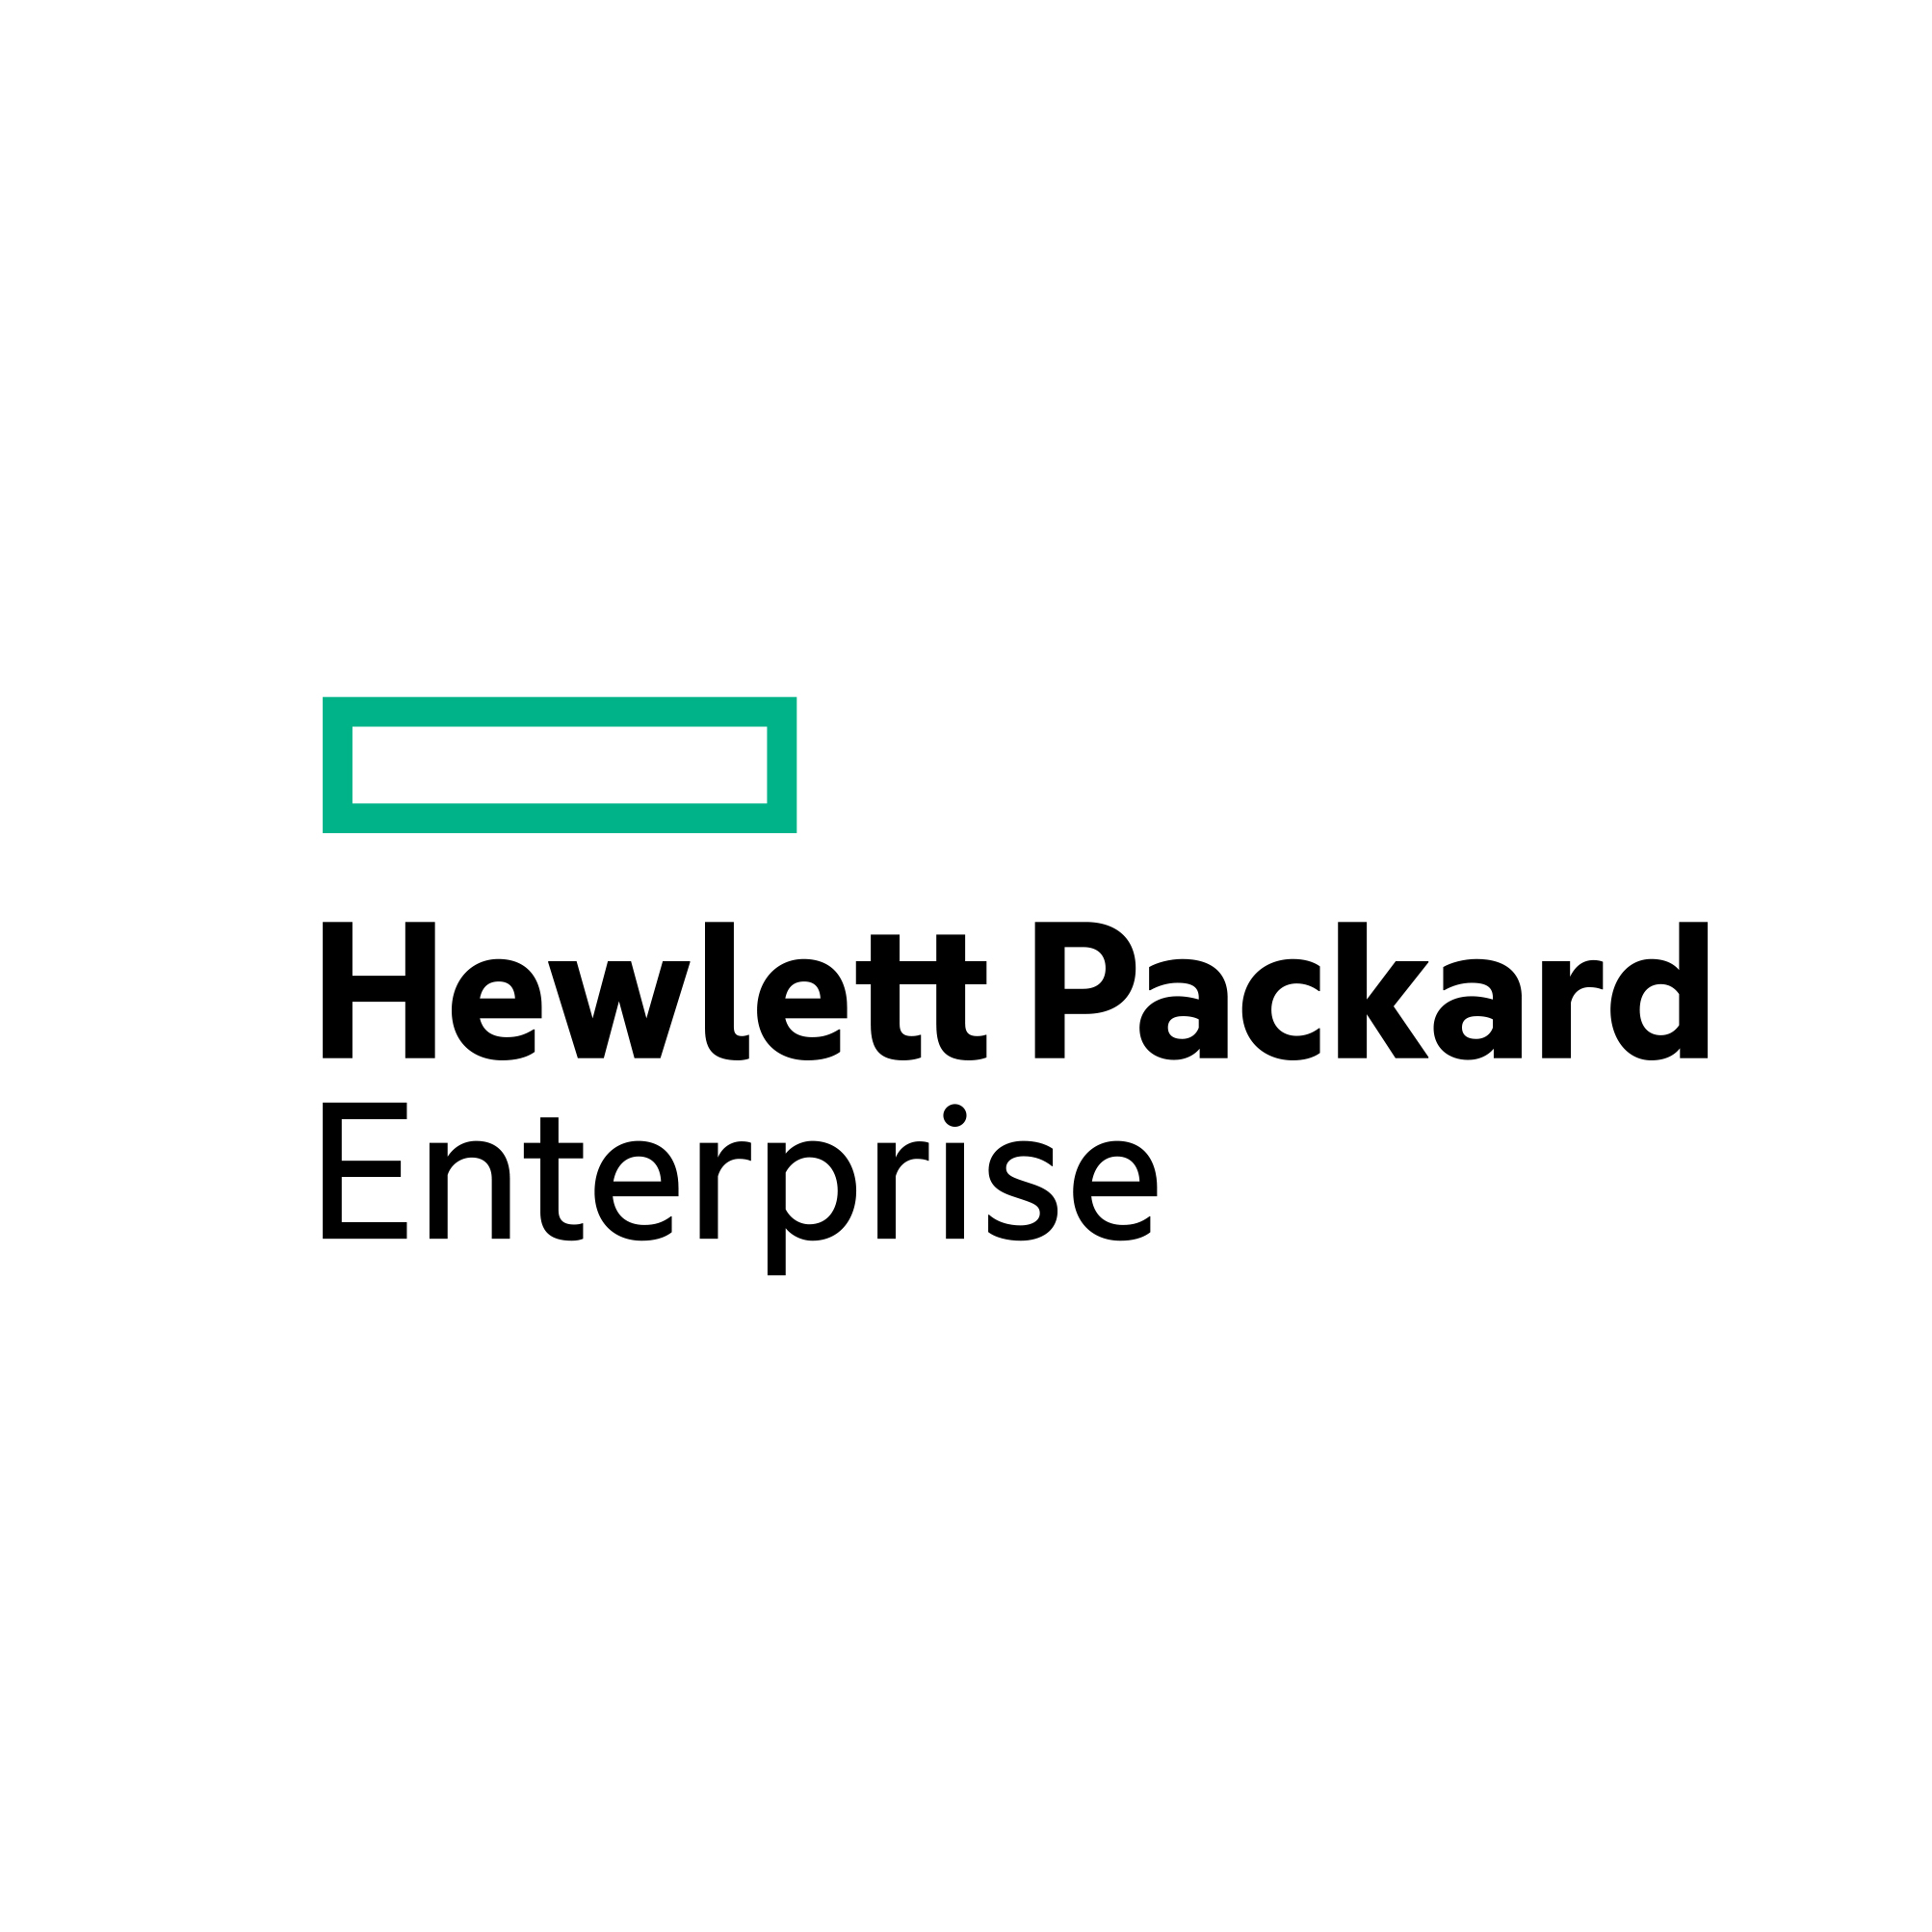 Hewlett Packard Enterprise (HPE)'s Logo